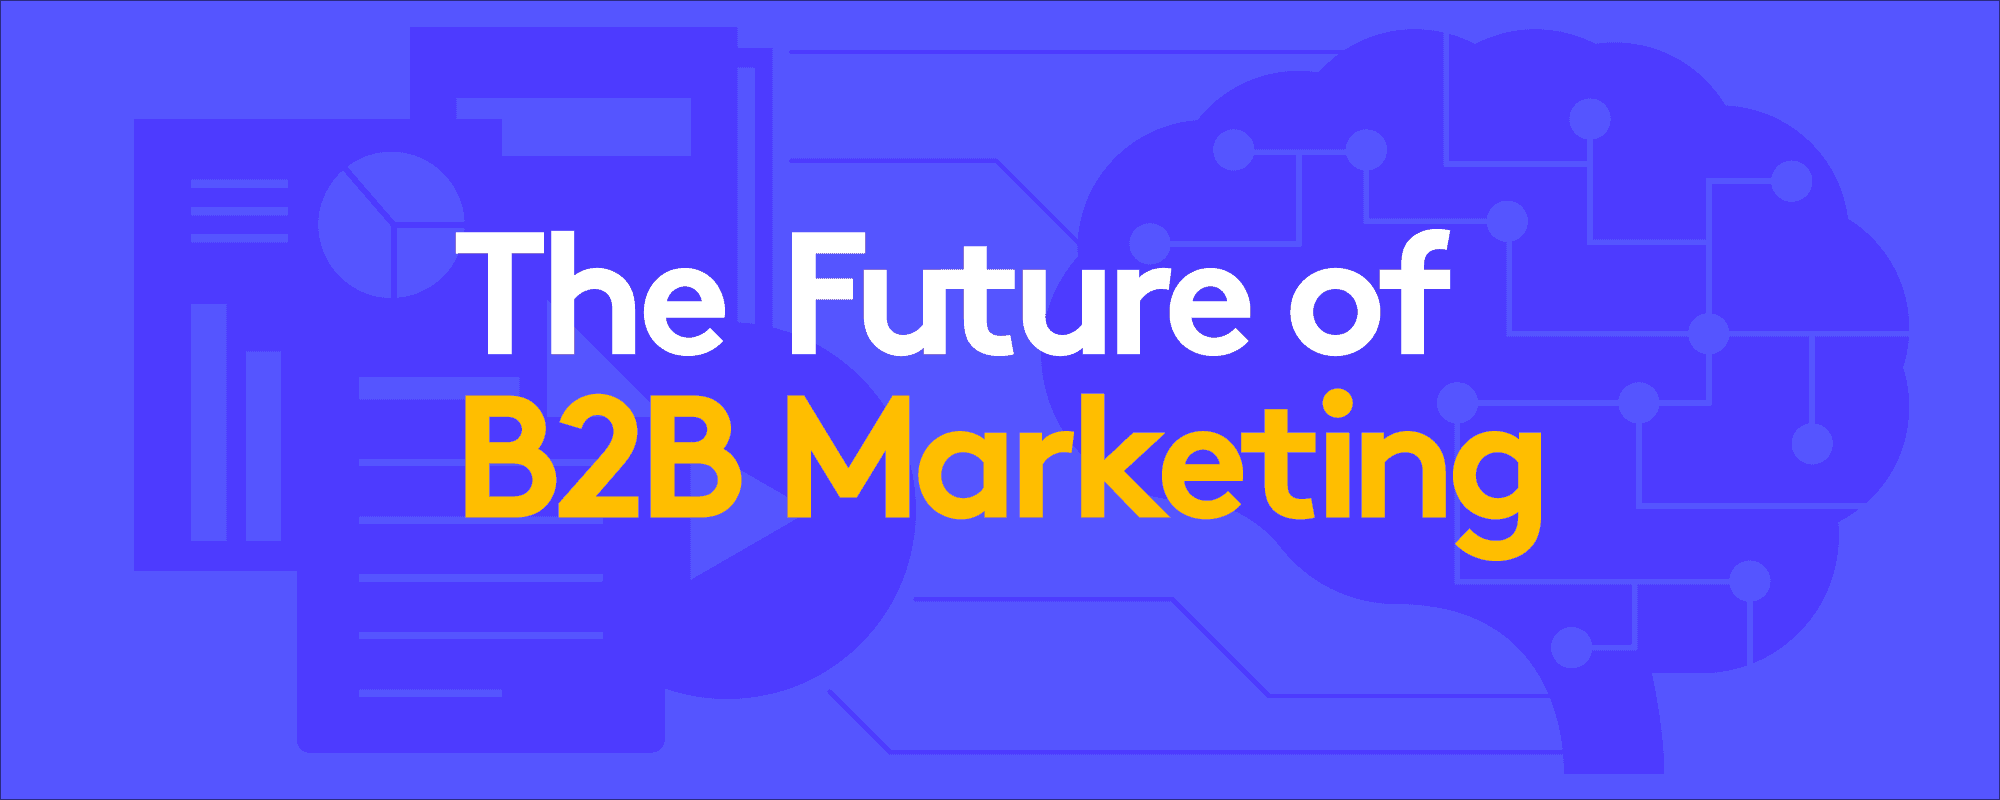 Text: The Future of B2B Marketing